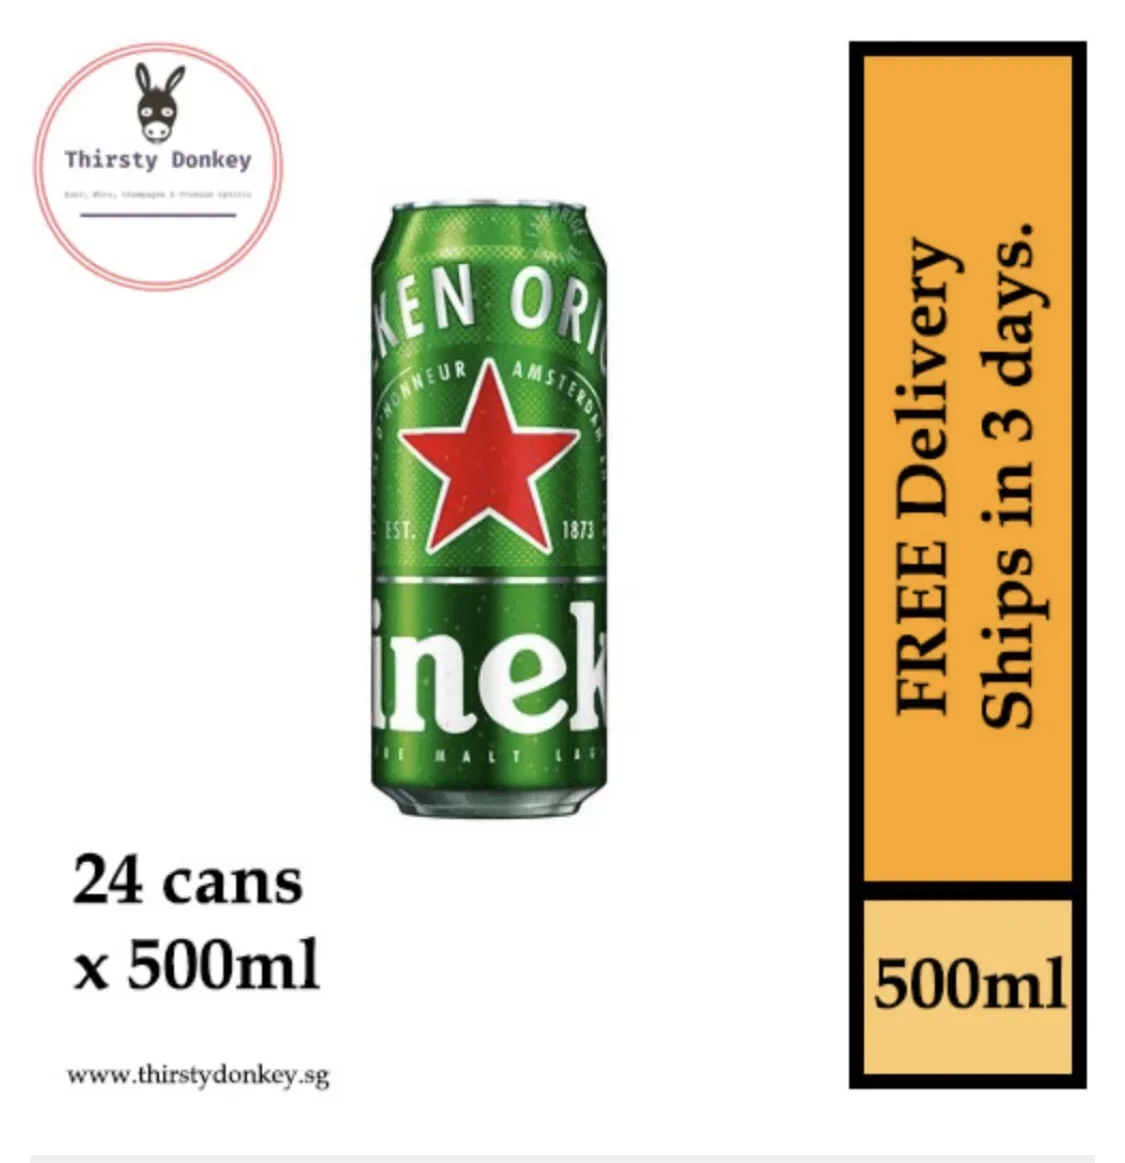 Heineken Lager Beer (24 cans x 500ml)